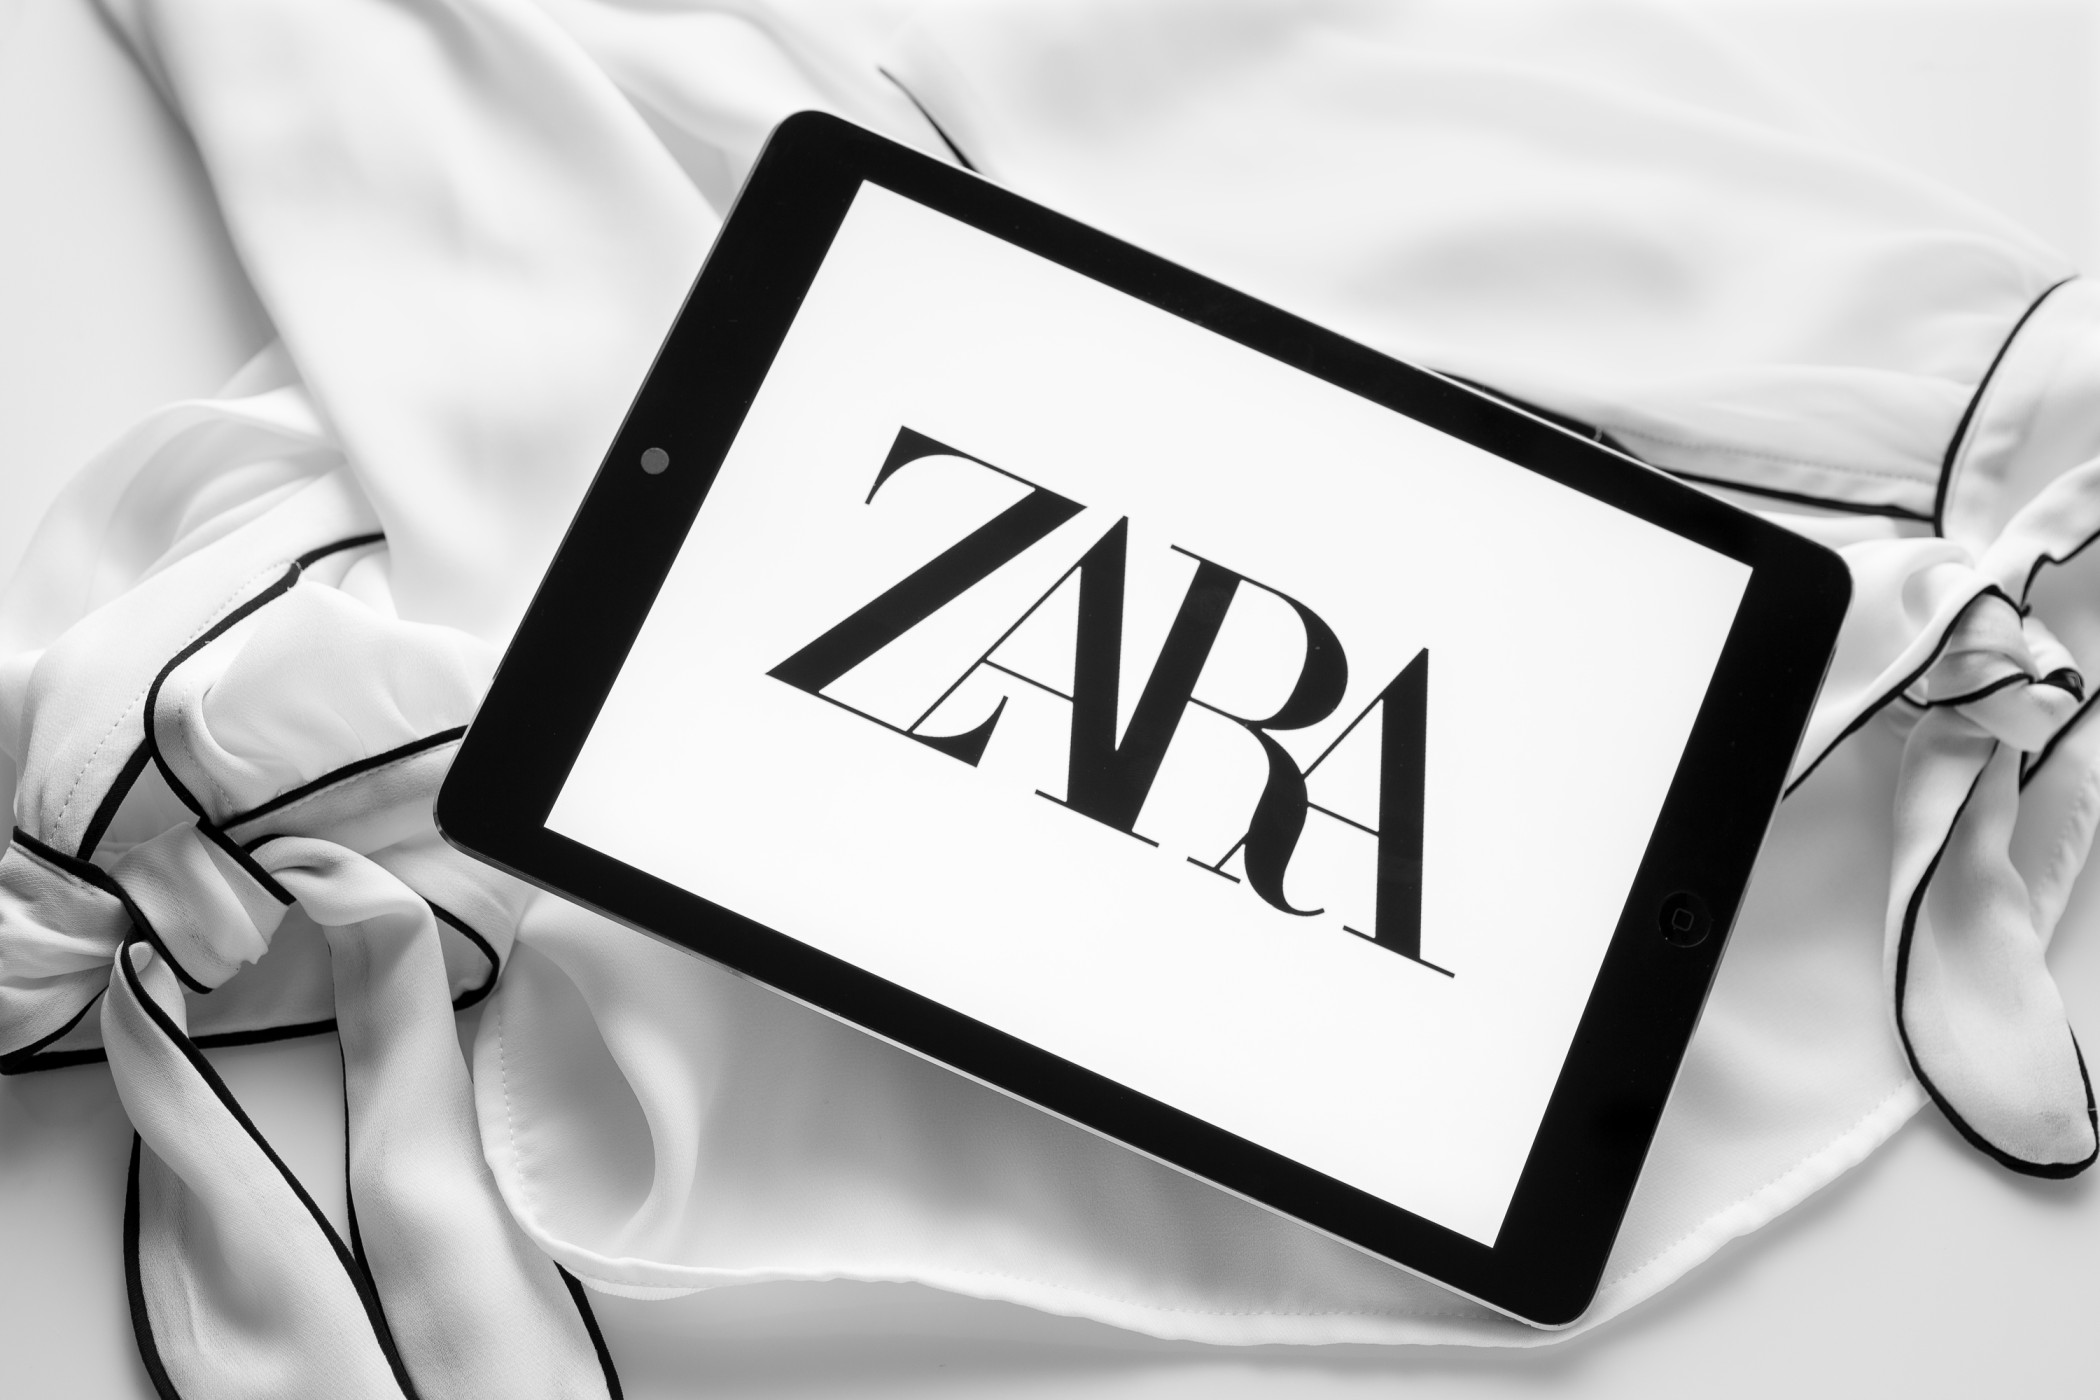 zara branding case study